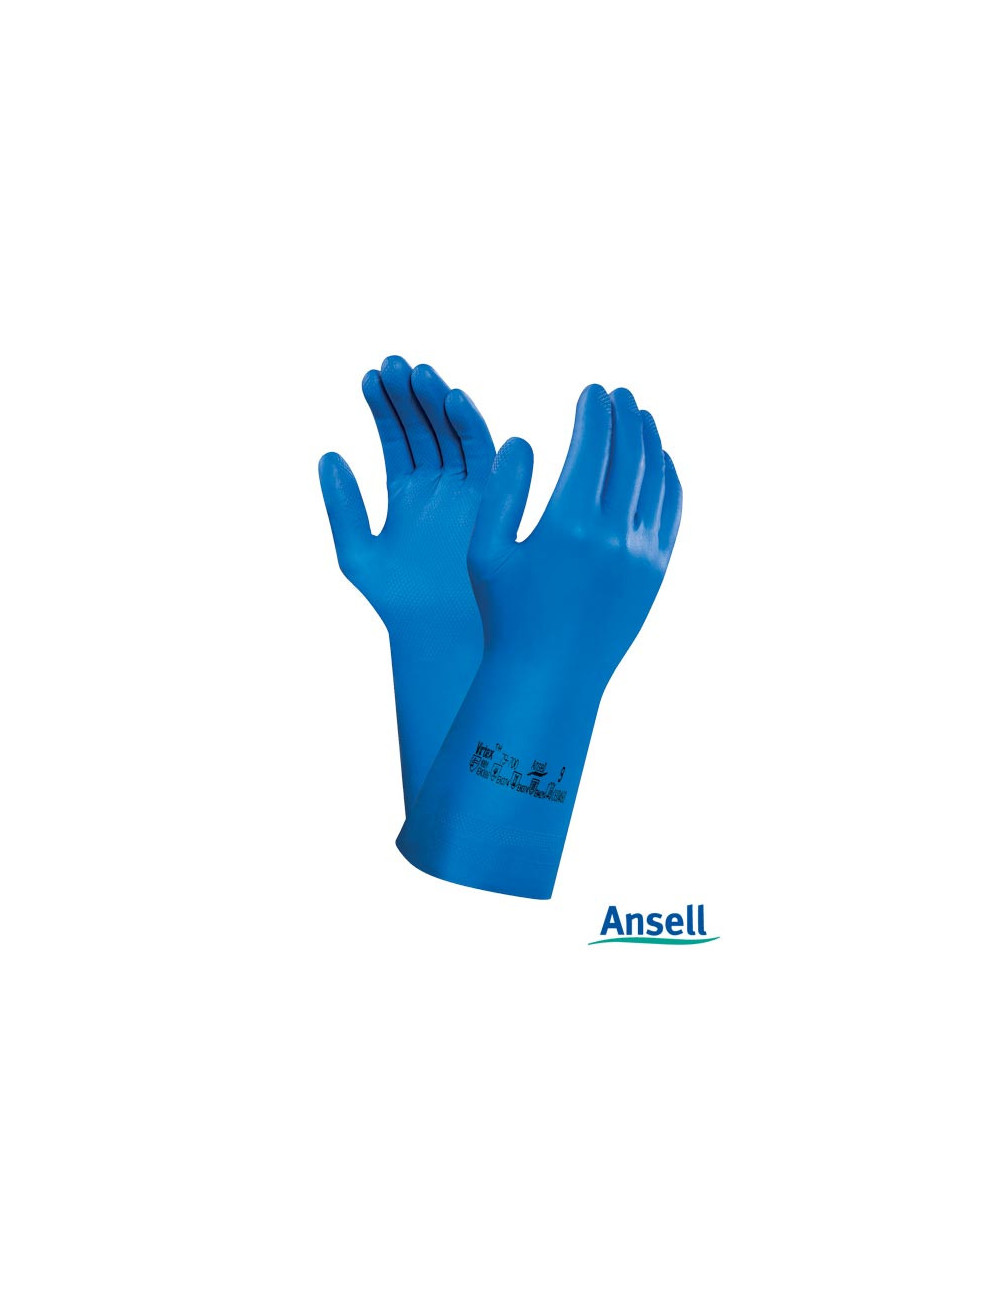 Protective gloves ravirtex79-700 n blue Ansell